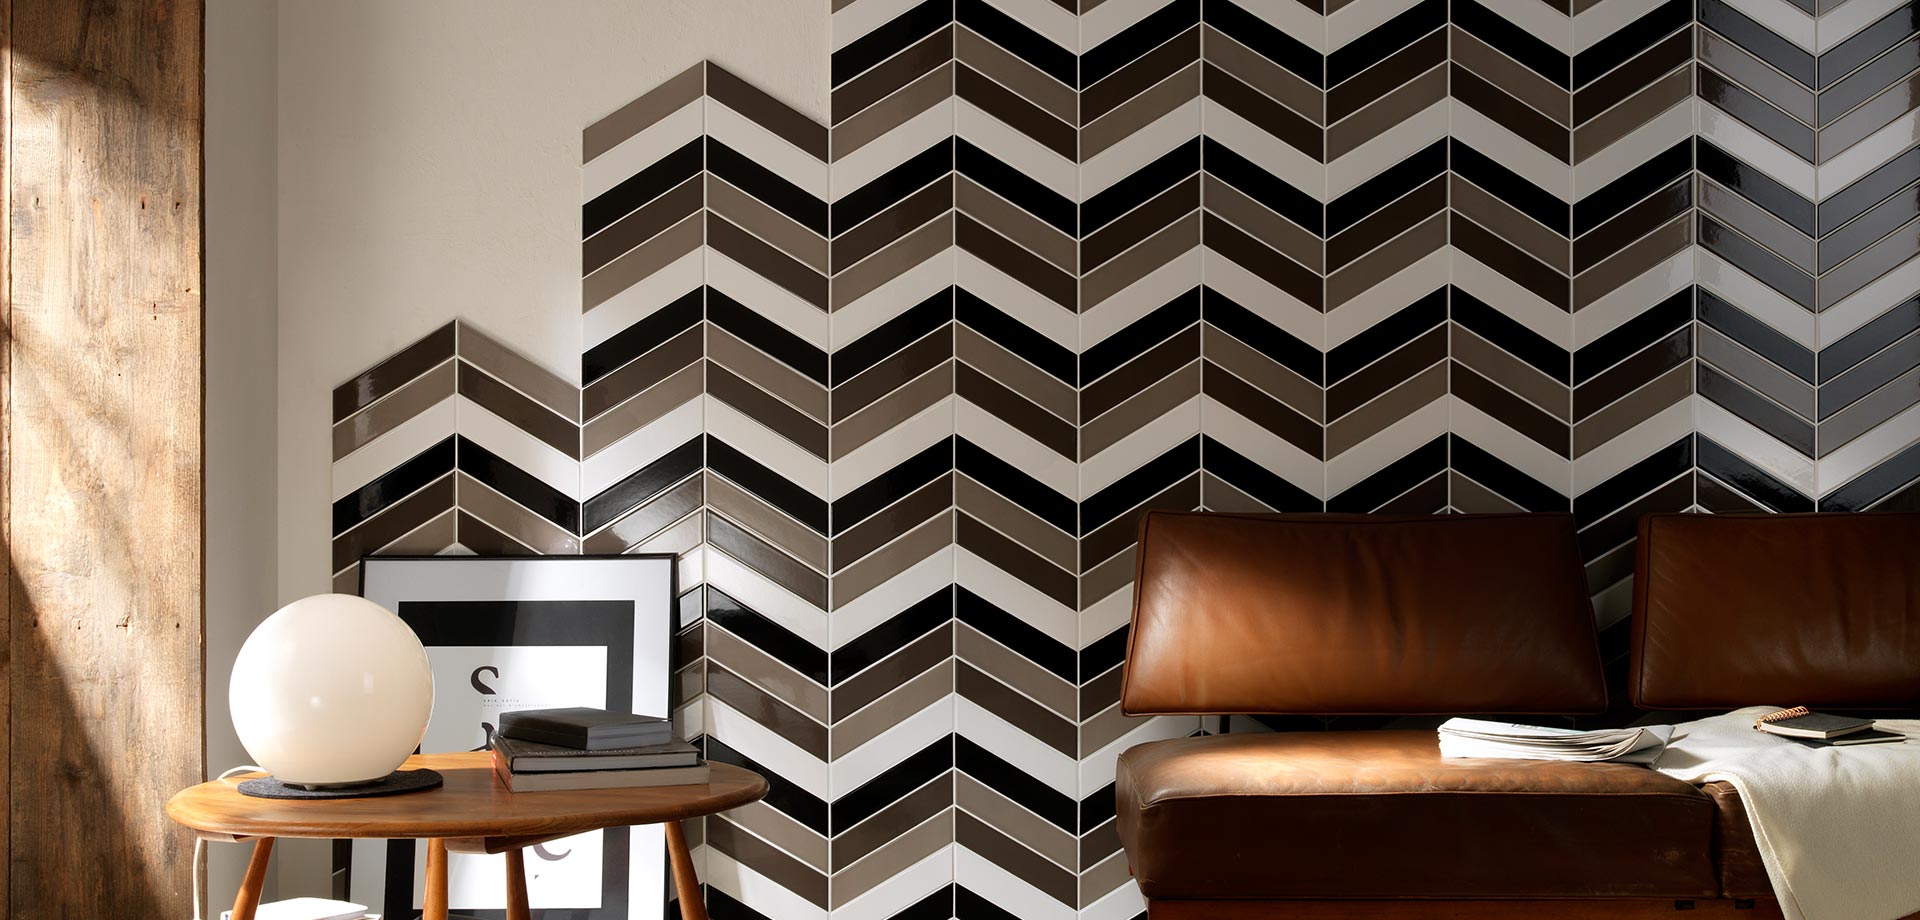 N-chevron - Tile New Design Wall - HD Wallpaper 